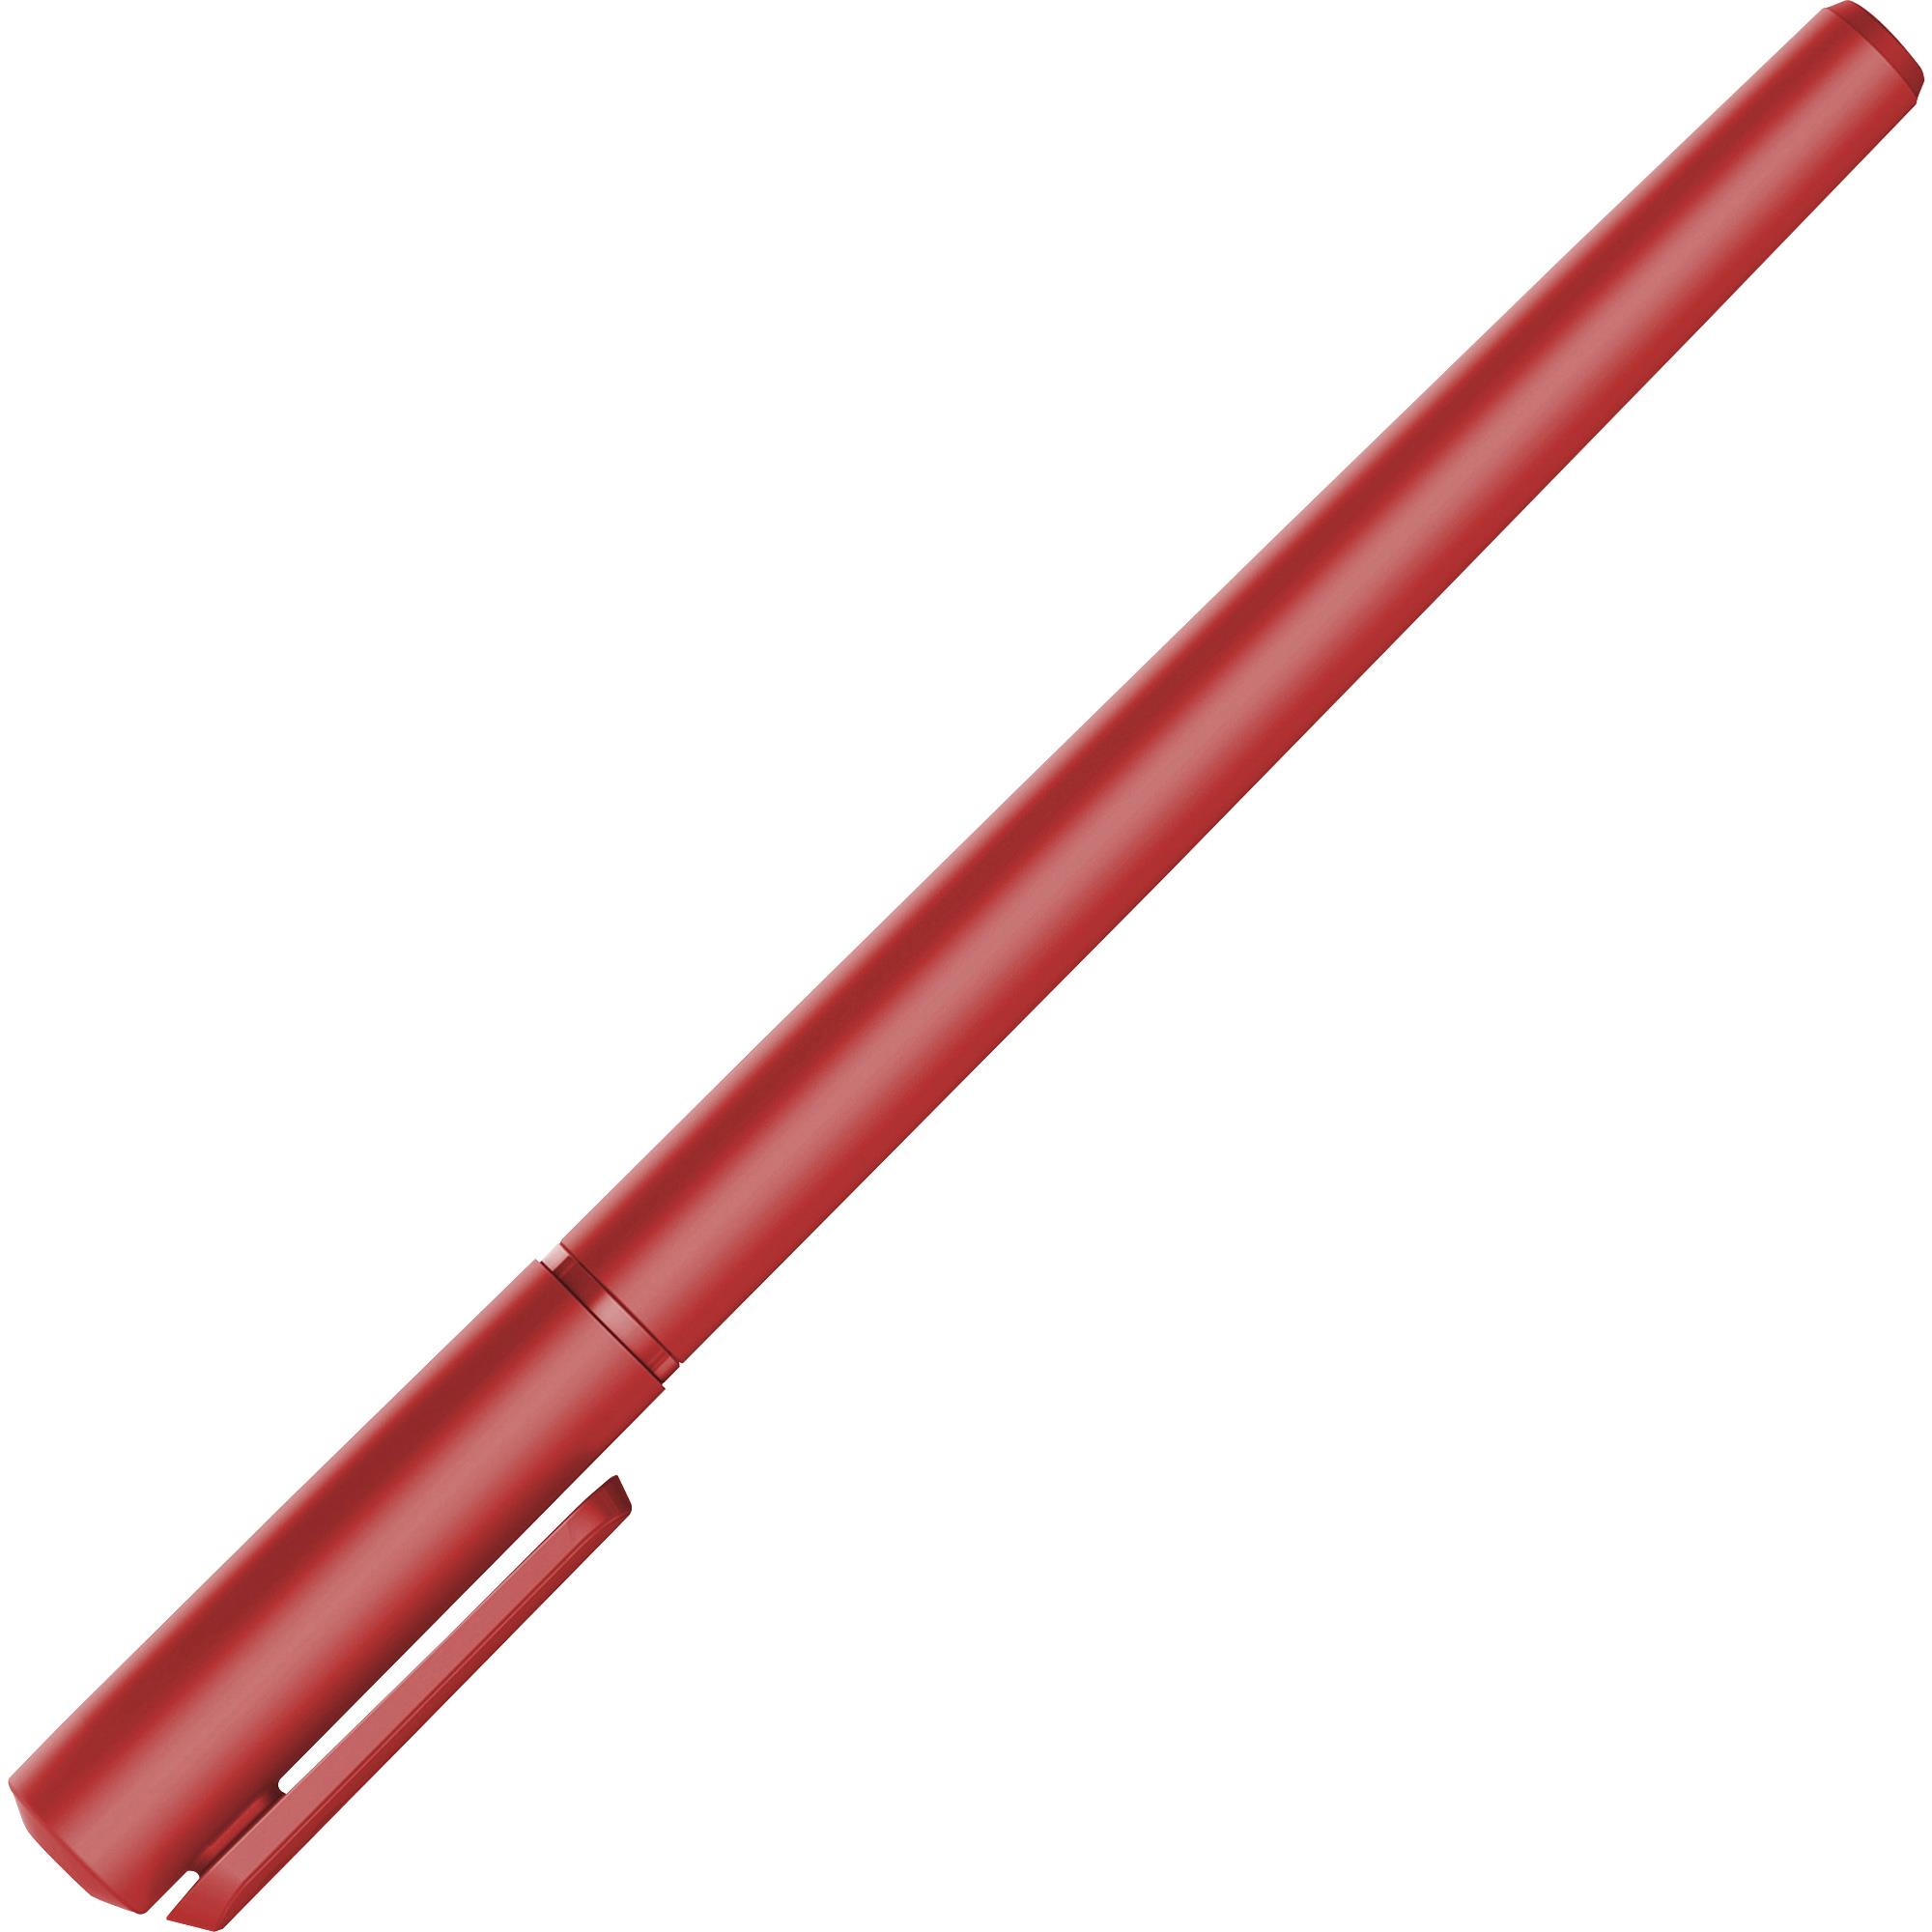 Paper Mate Flair Red Felt Tip Pens Point Guard, Bulk Pack of 24